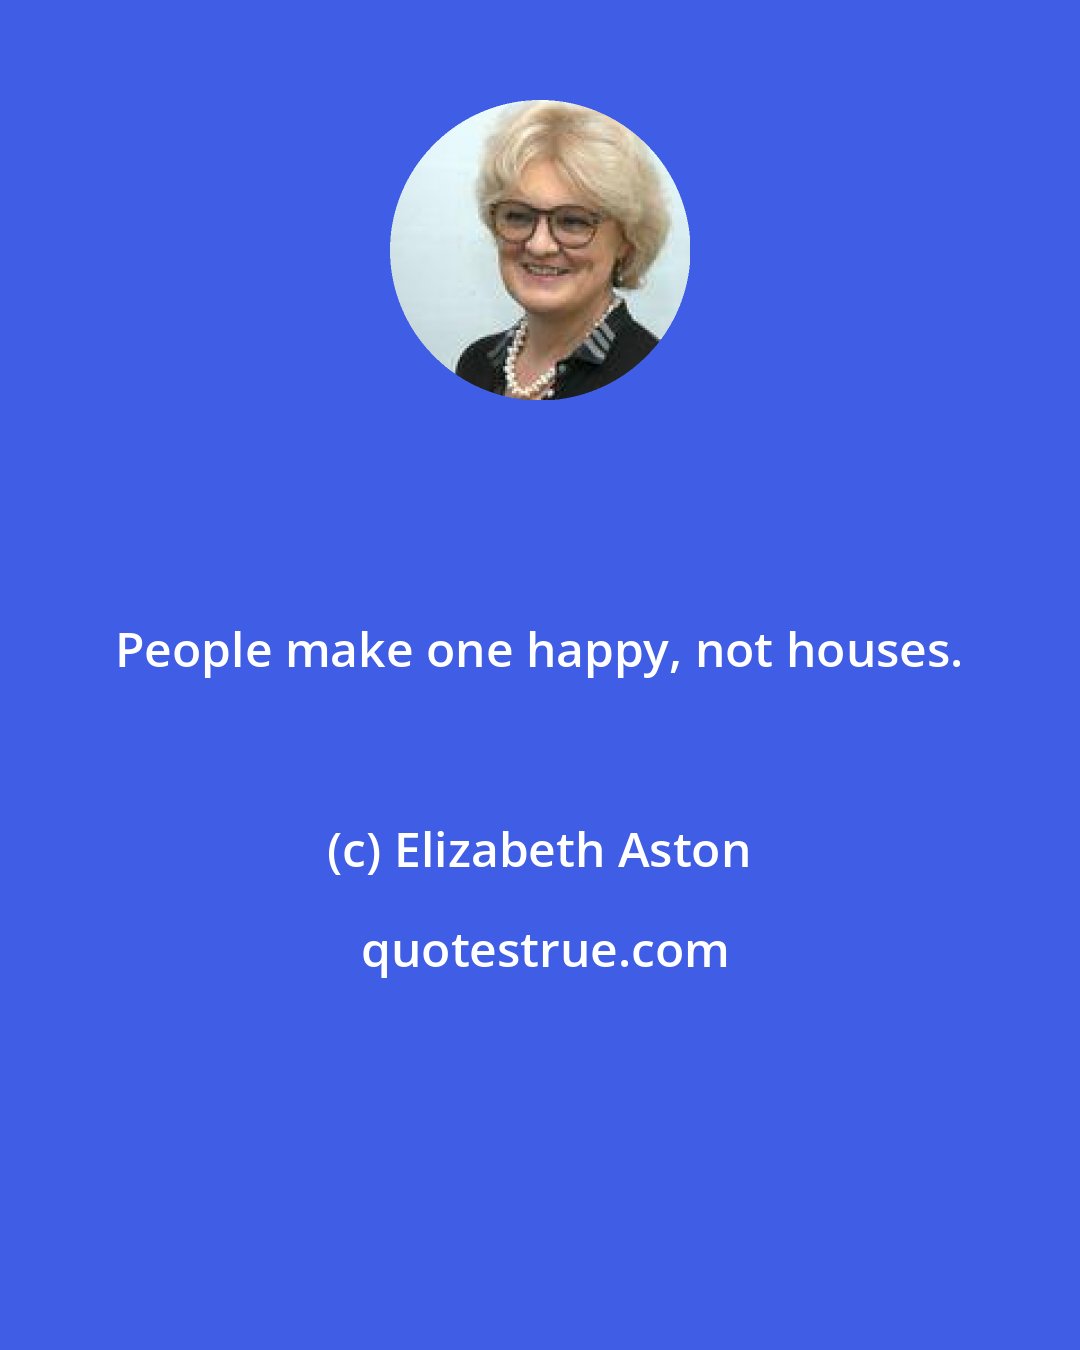 Elizabeth Aston: People make one happy, not houses.